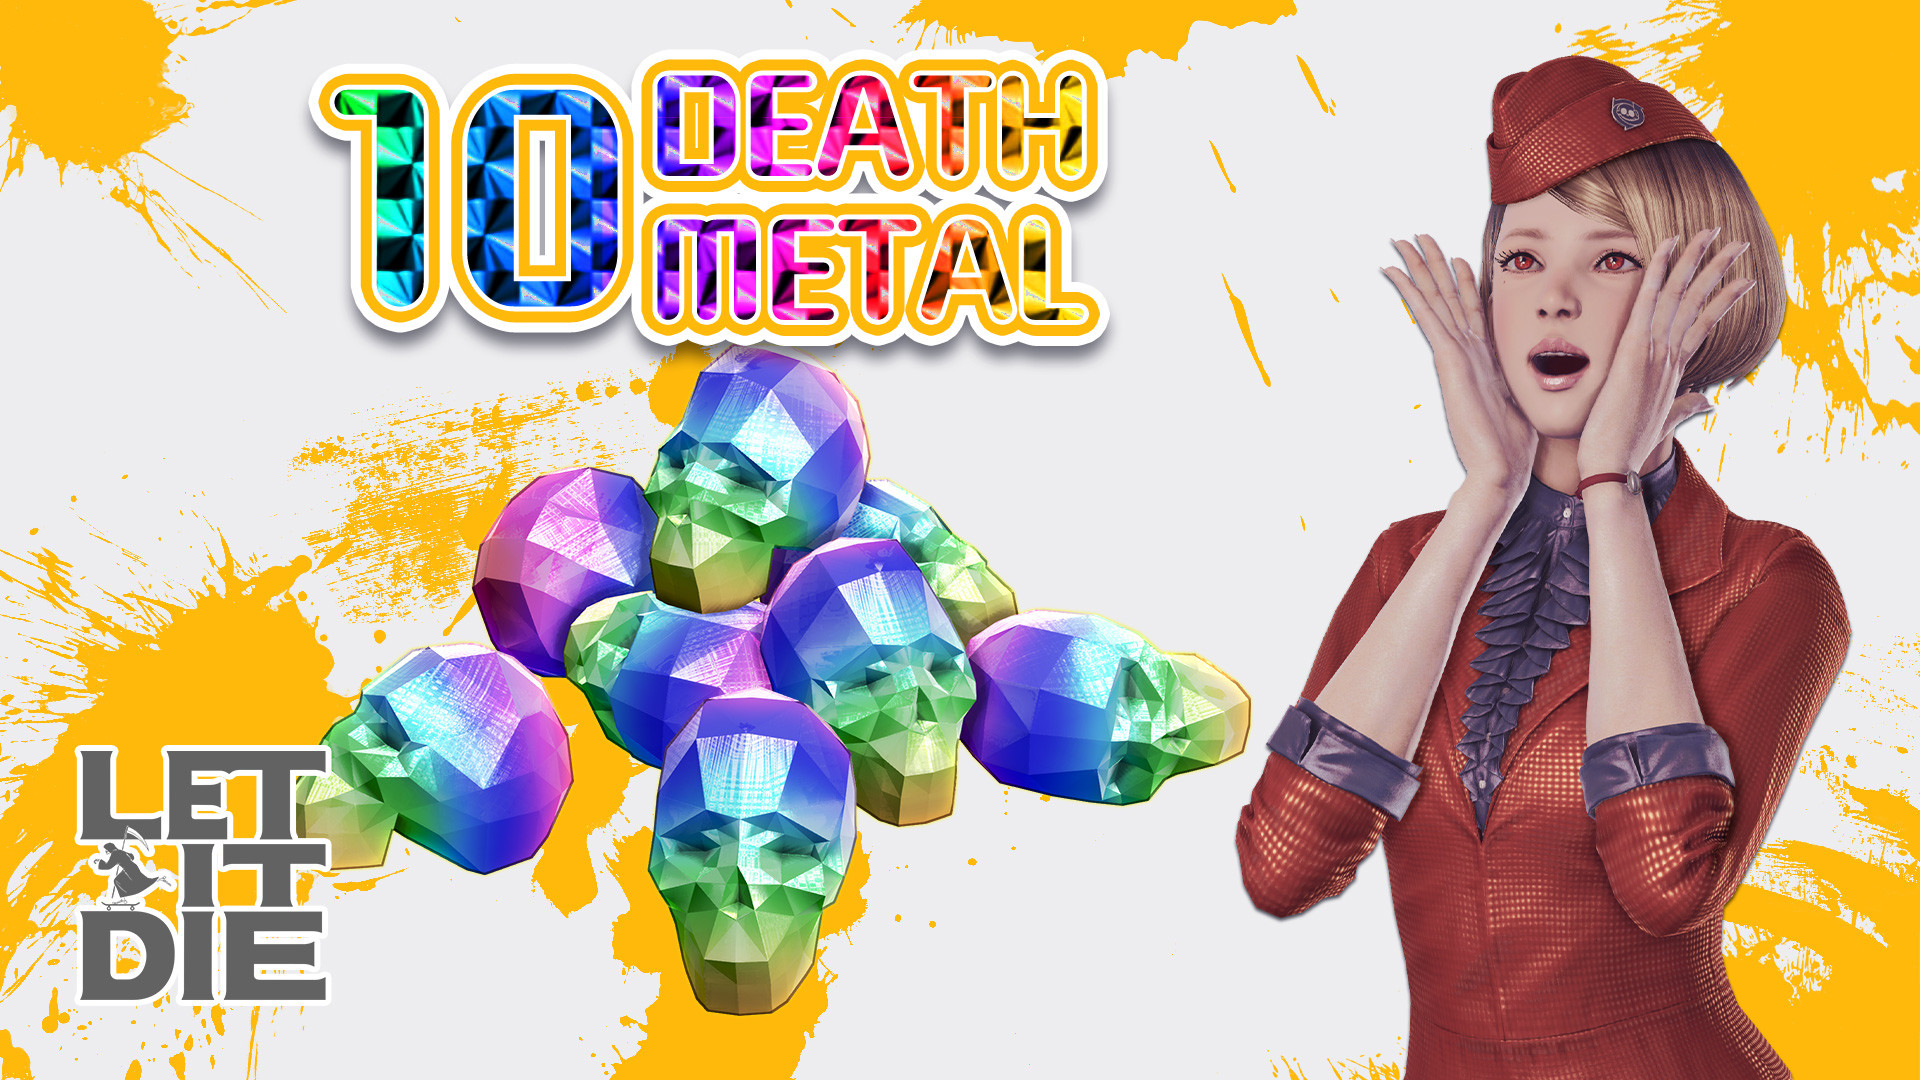 LET IT DIE -(Special)10 Death Metals- 020 Featured Screenshot #1